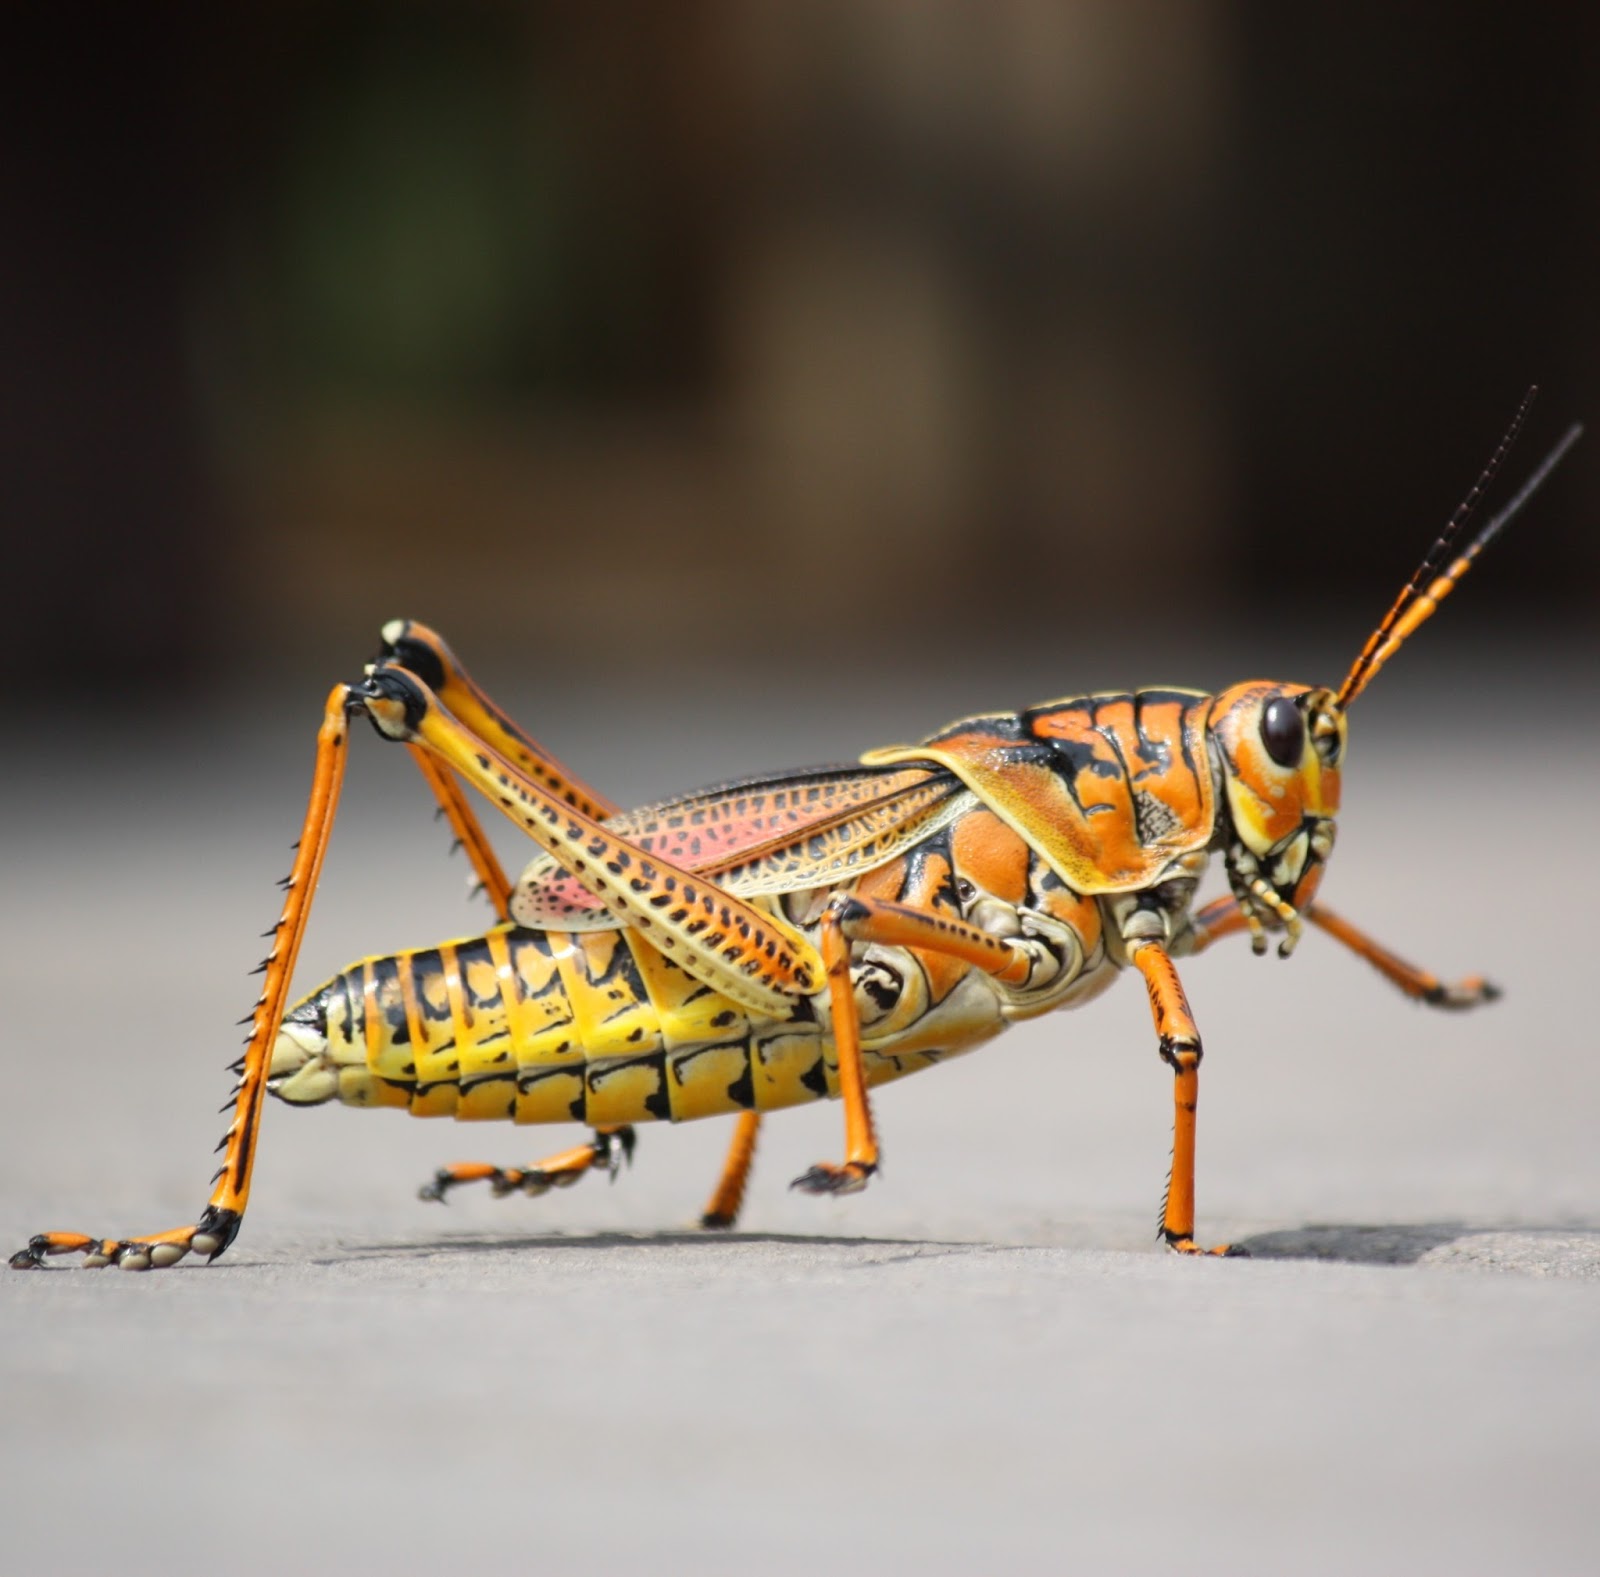 A colorful photo of a grasshopper up close.